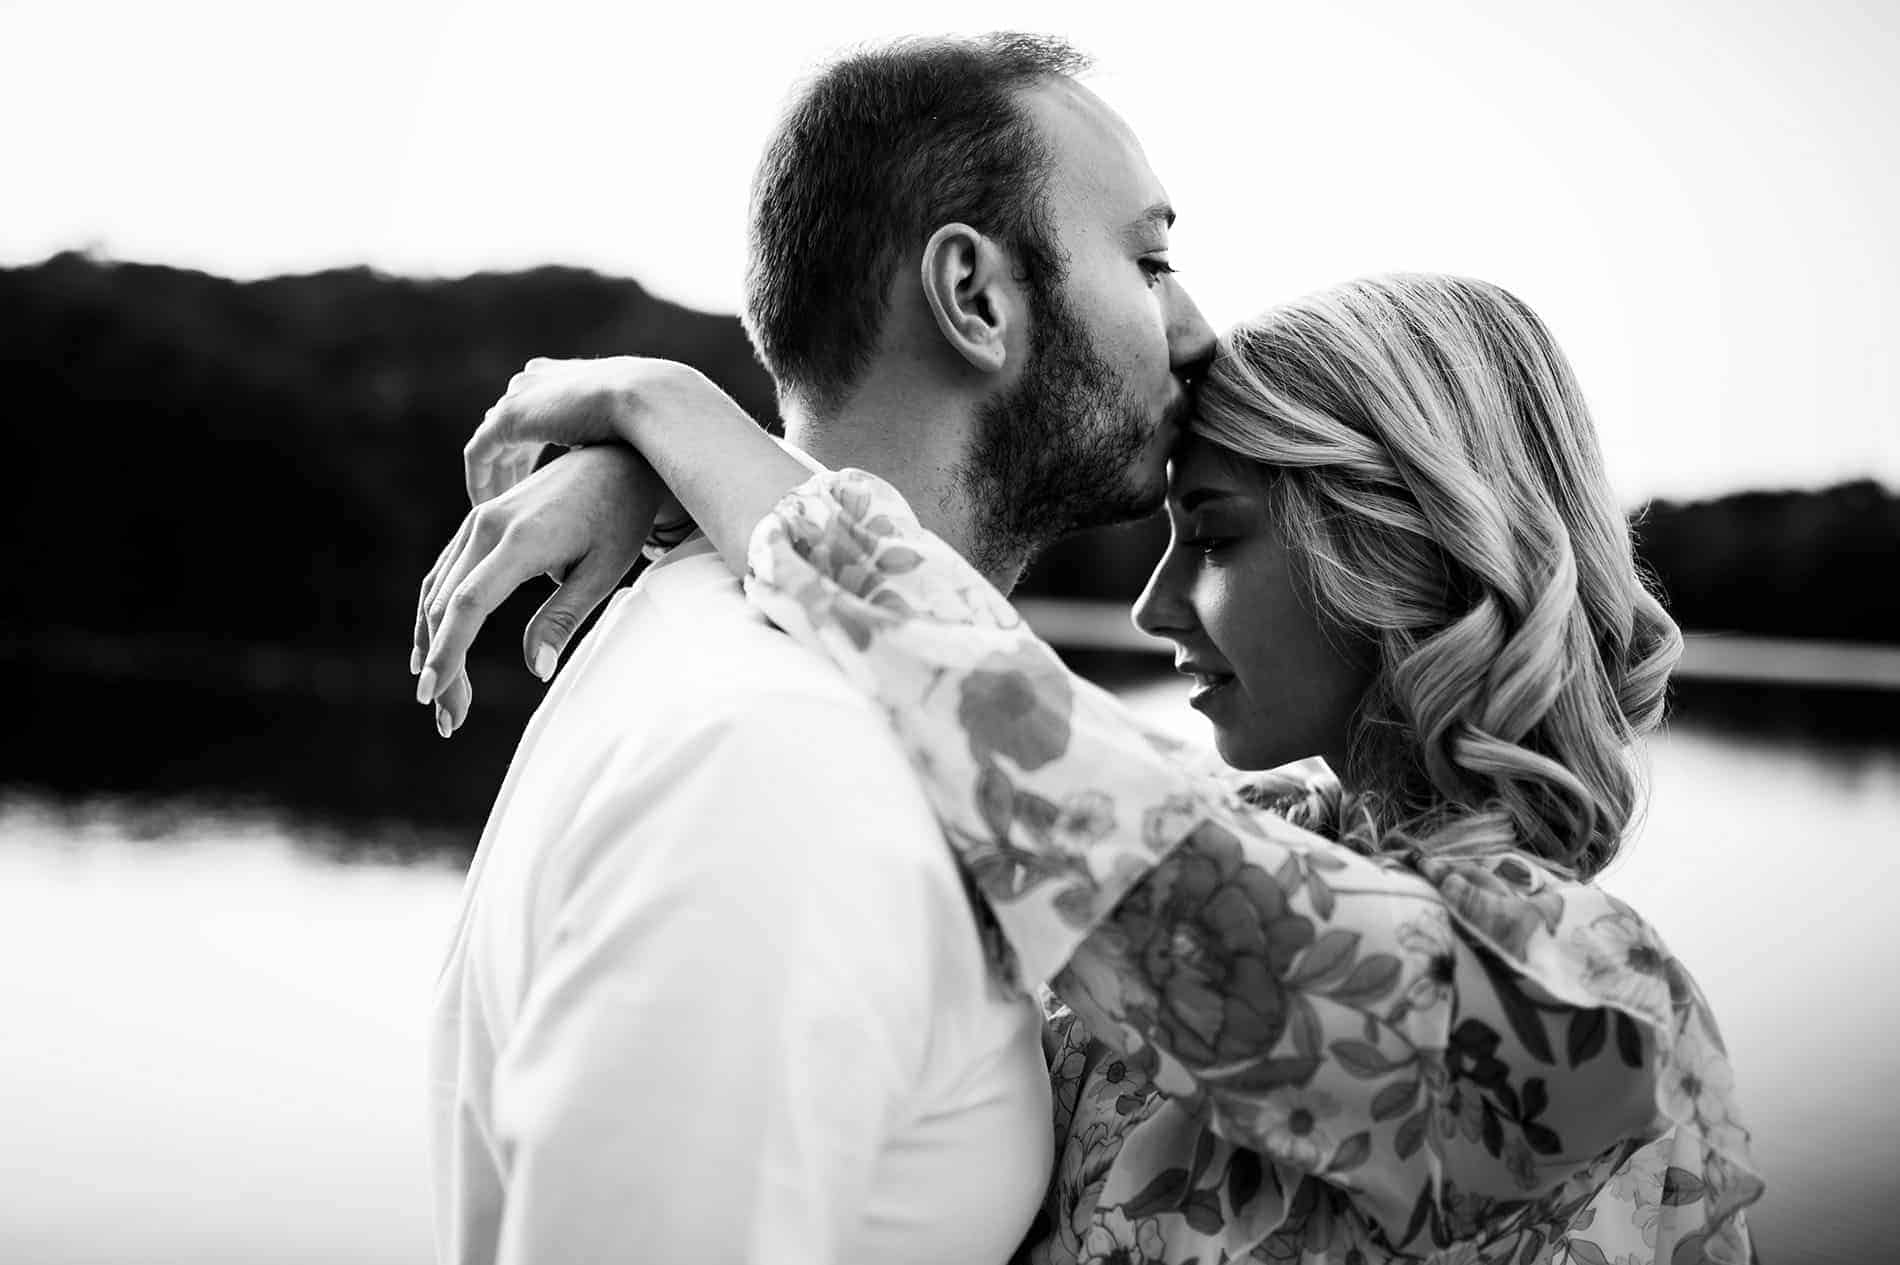 Rachel and Nick – Birmingham Engagement Photography